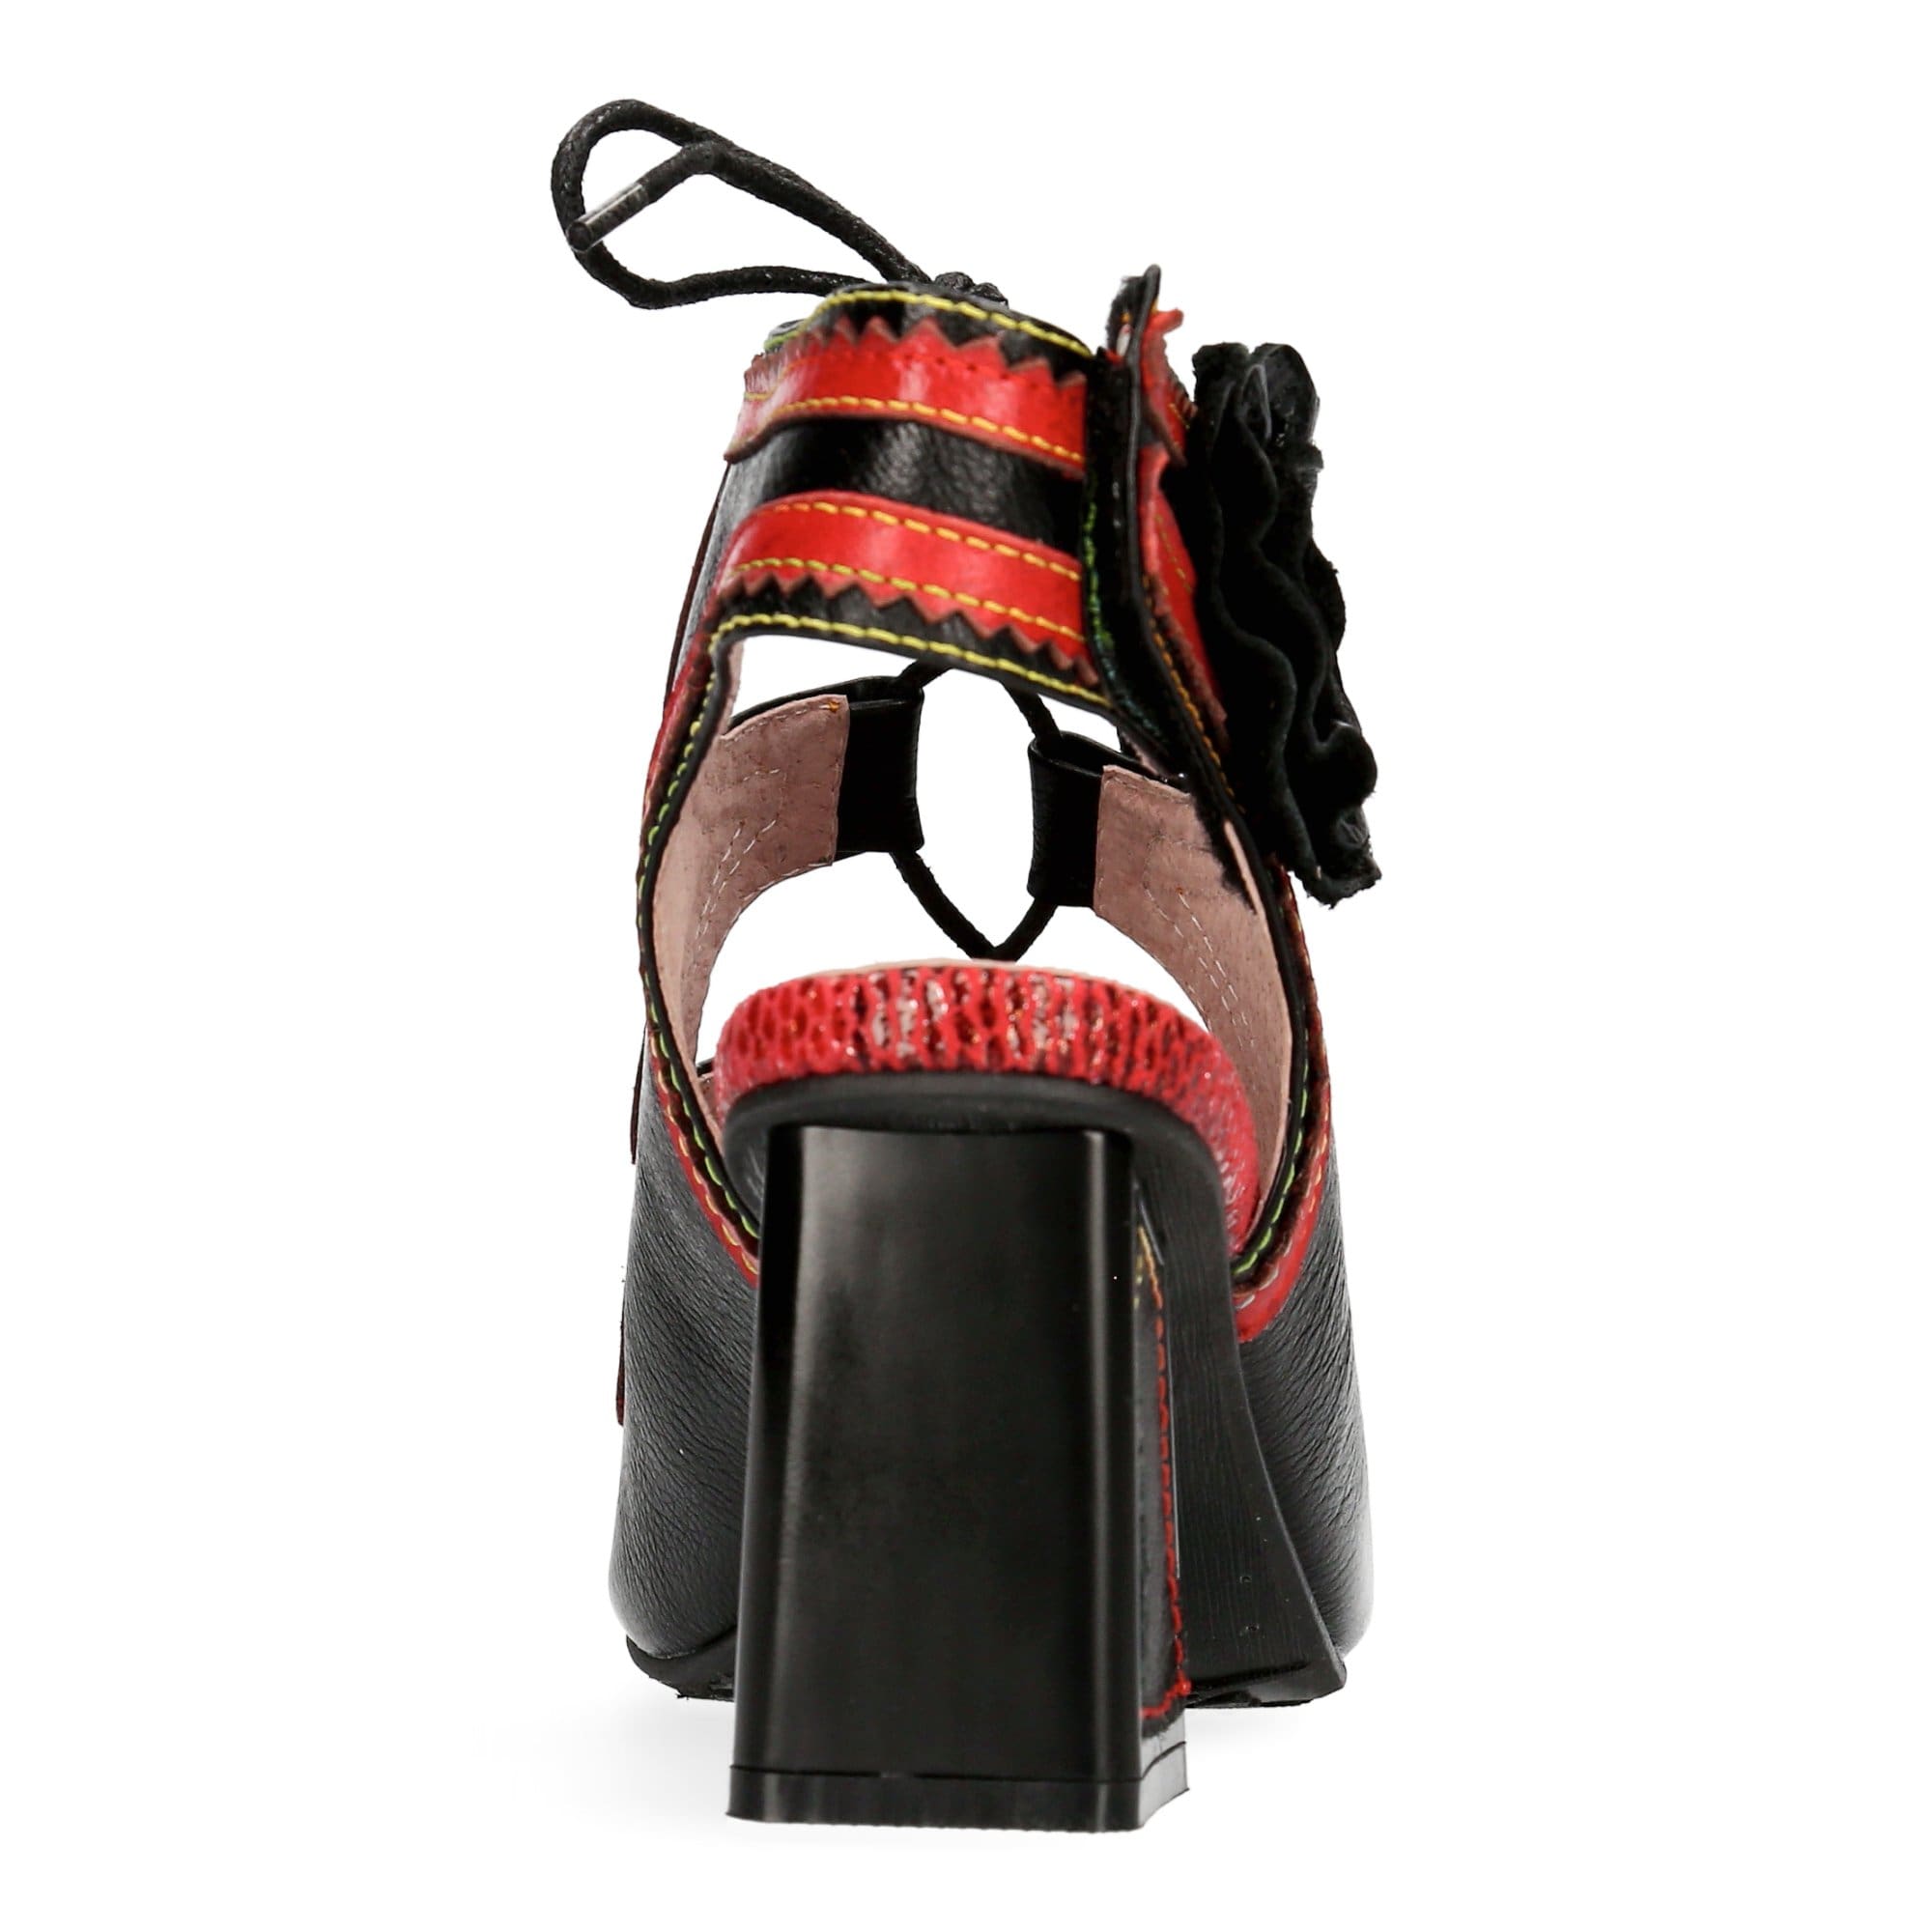 HACKIO 11 skor - Sandal